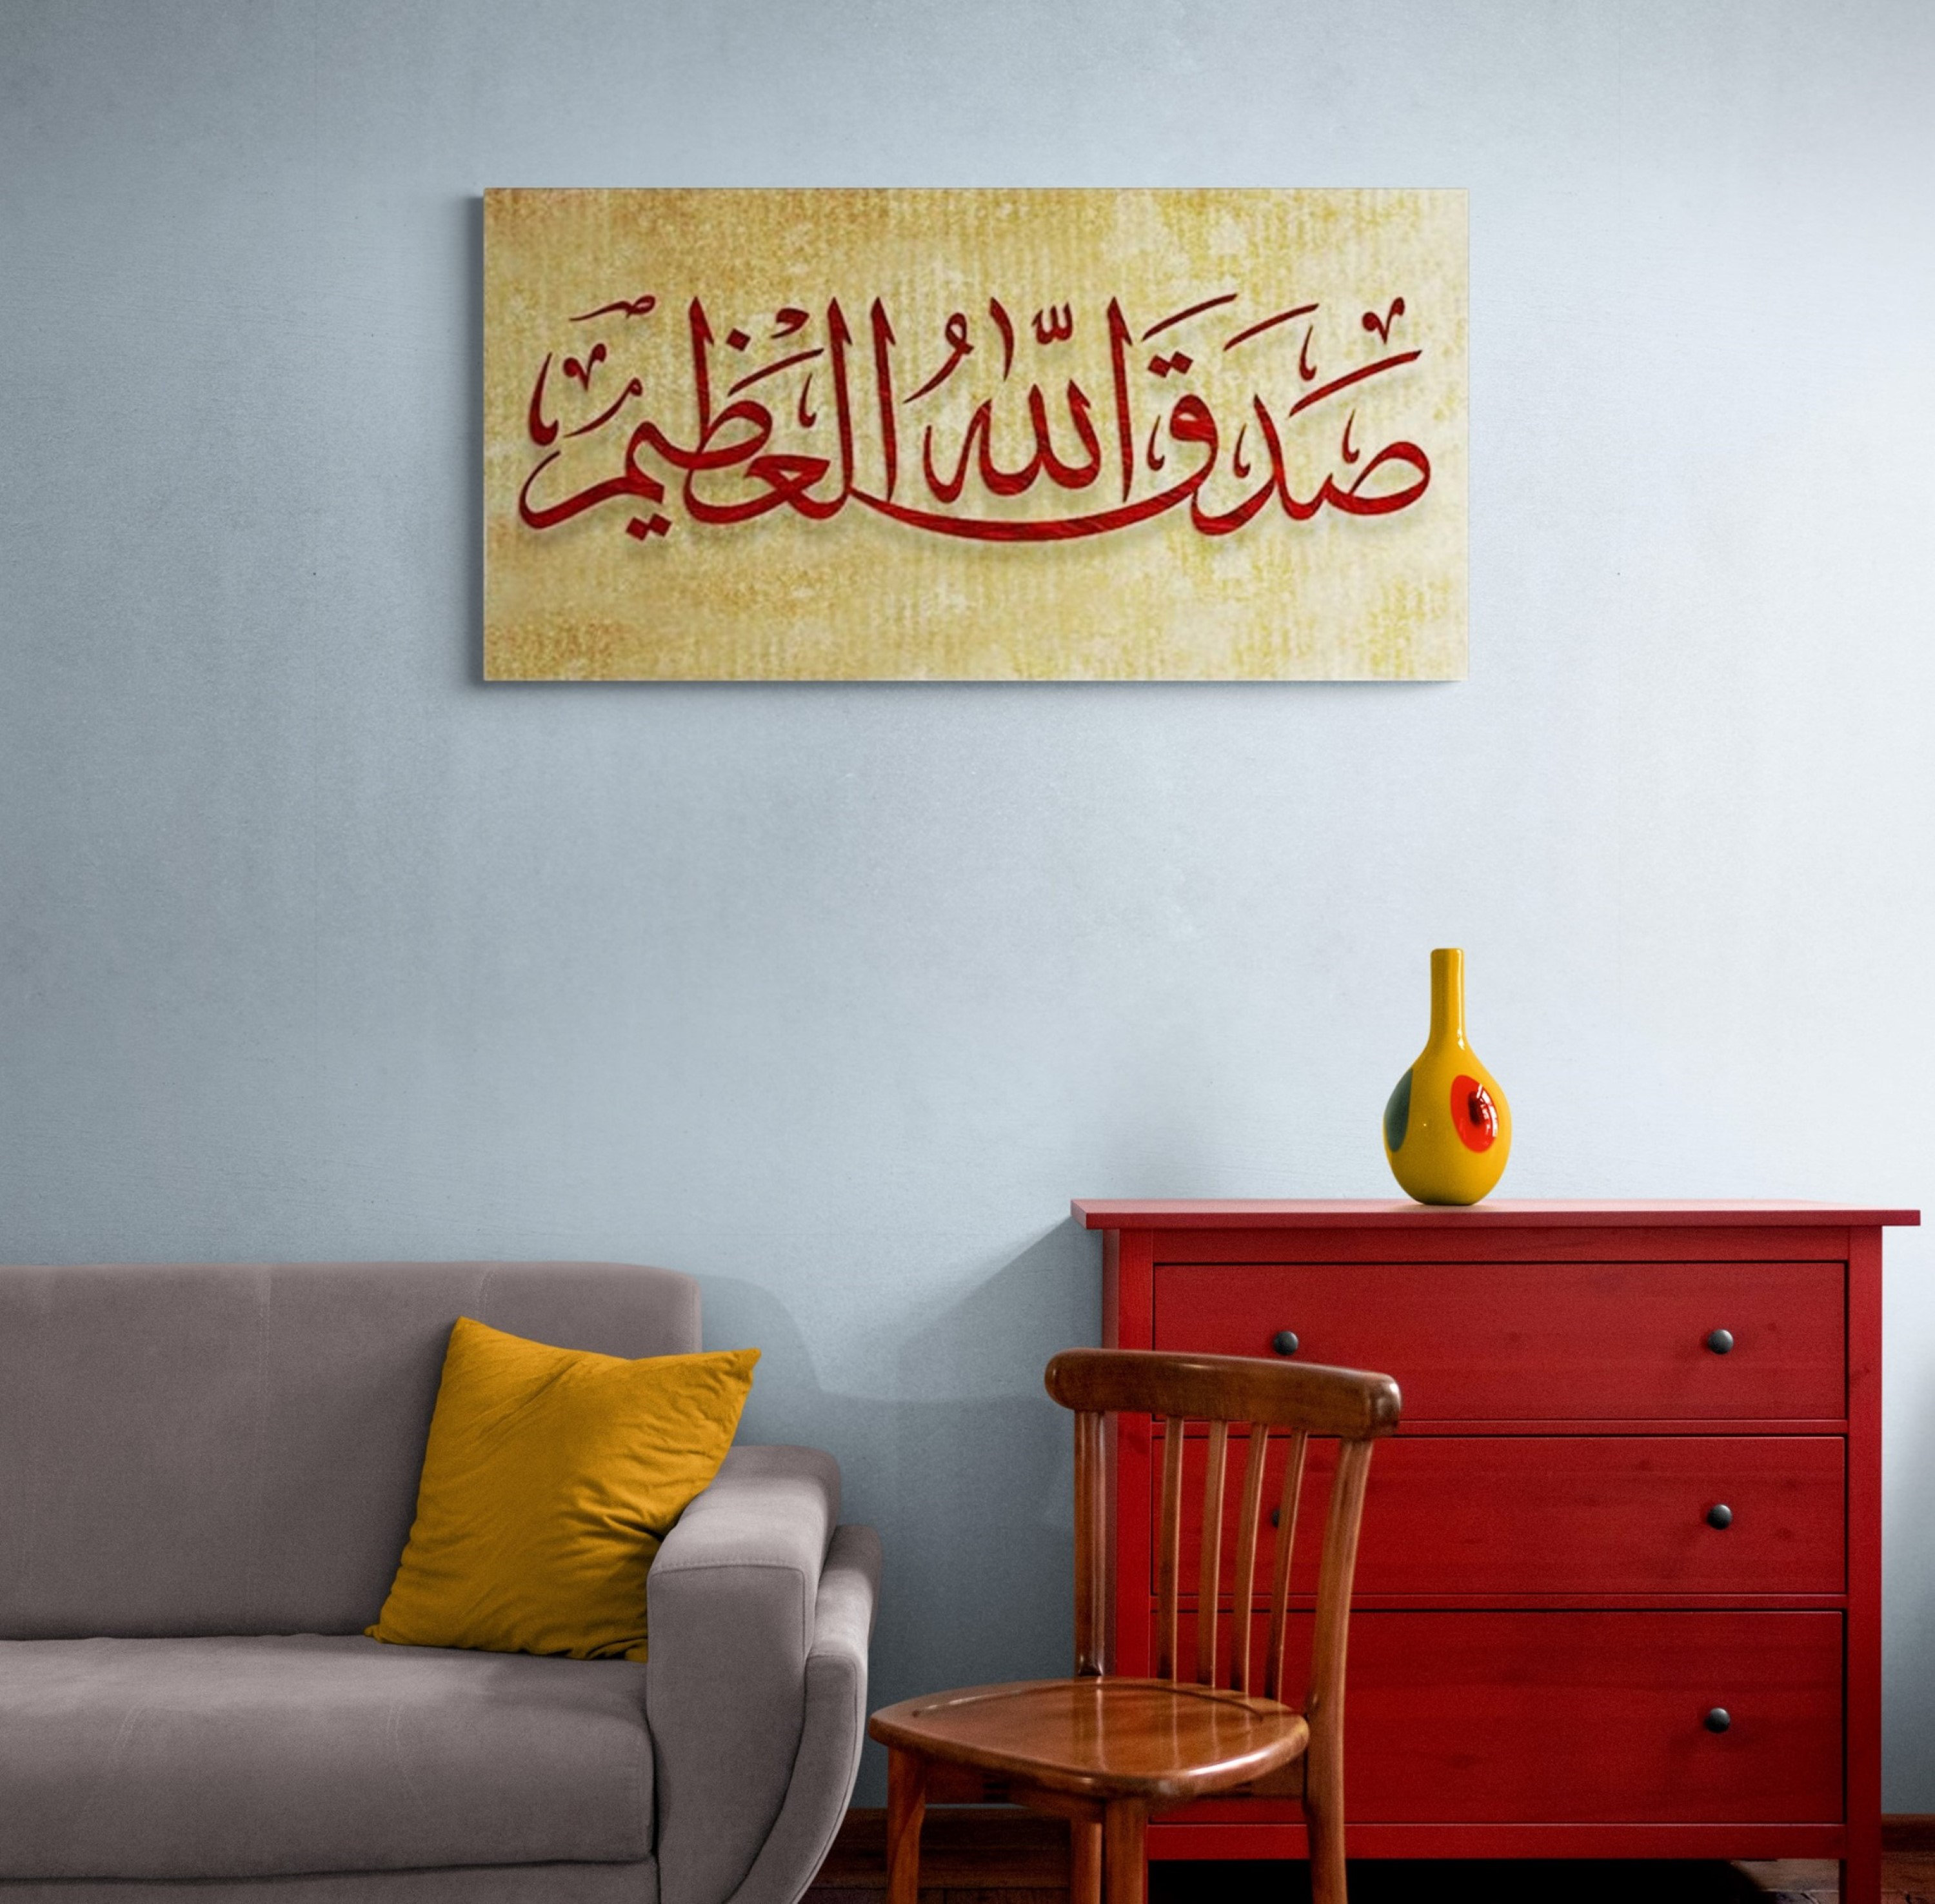 Ramadan Mubarak Decor for Tables, Muslim Gifts, Eid Gifts, Eid Mubarak  Signs, Ramadan Decoration, Muslim Gifts, Islamic Home Decor Wall Art 